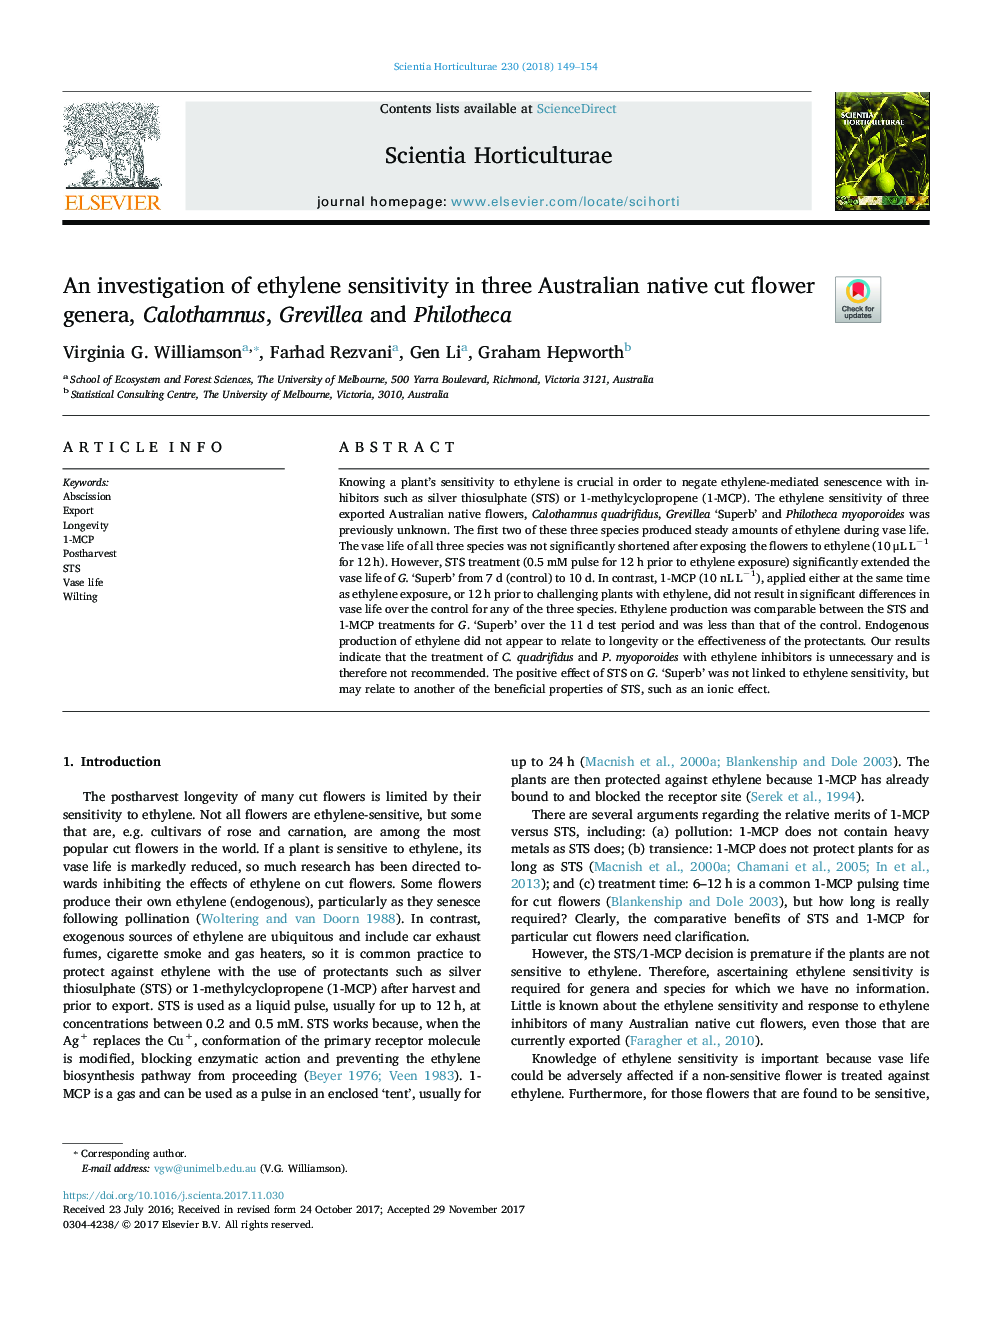 An investigation of ethylene sensitivity in three Australian native cut flower genera, Calothamnus, Grevillea and Philotheca